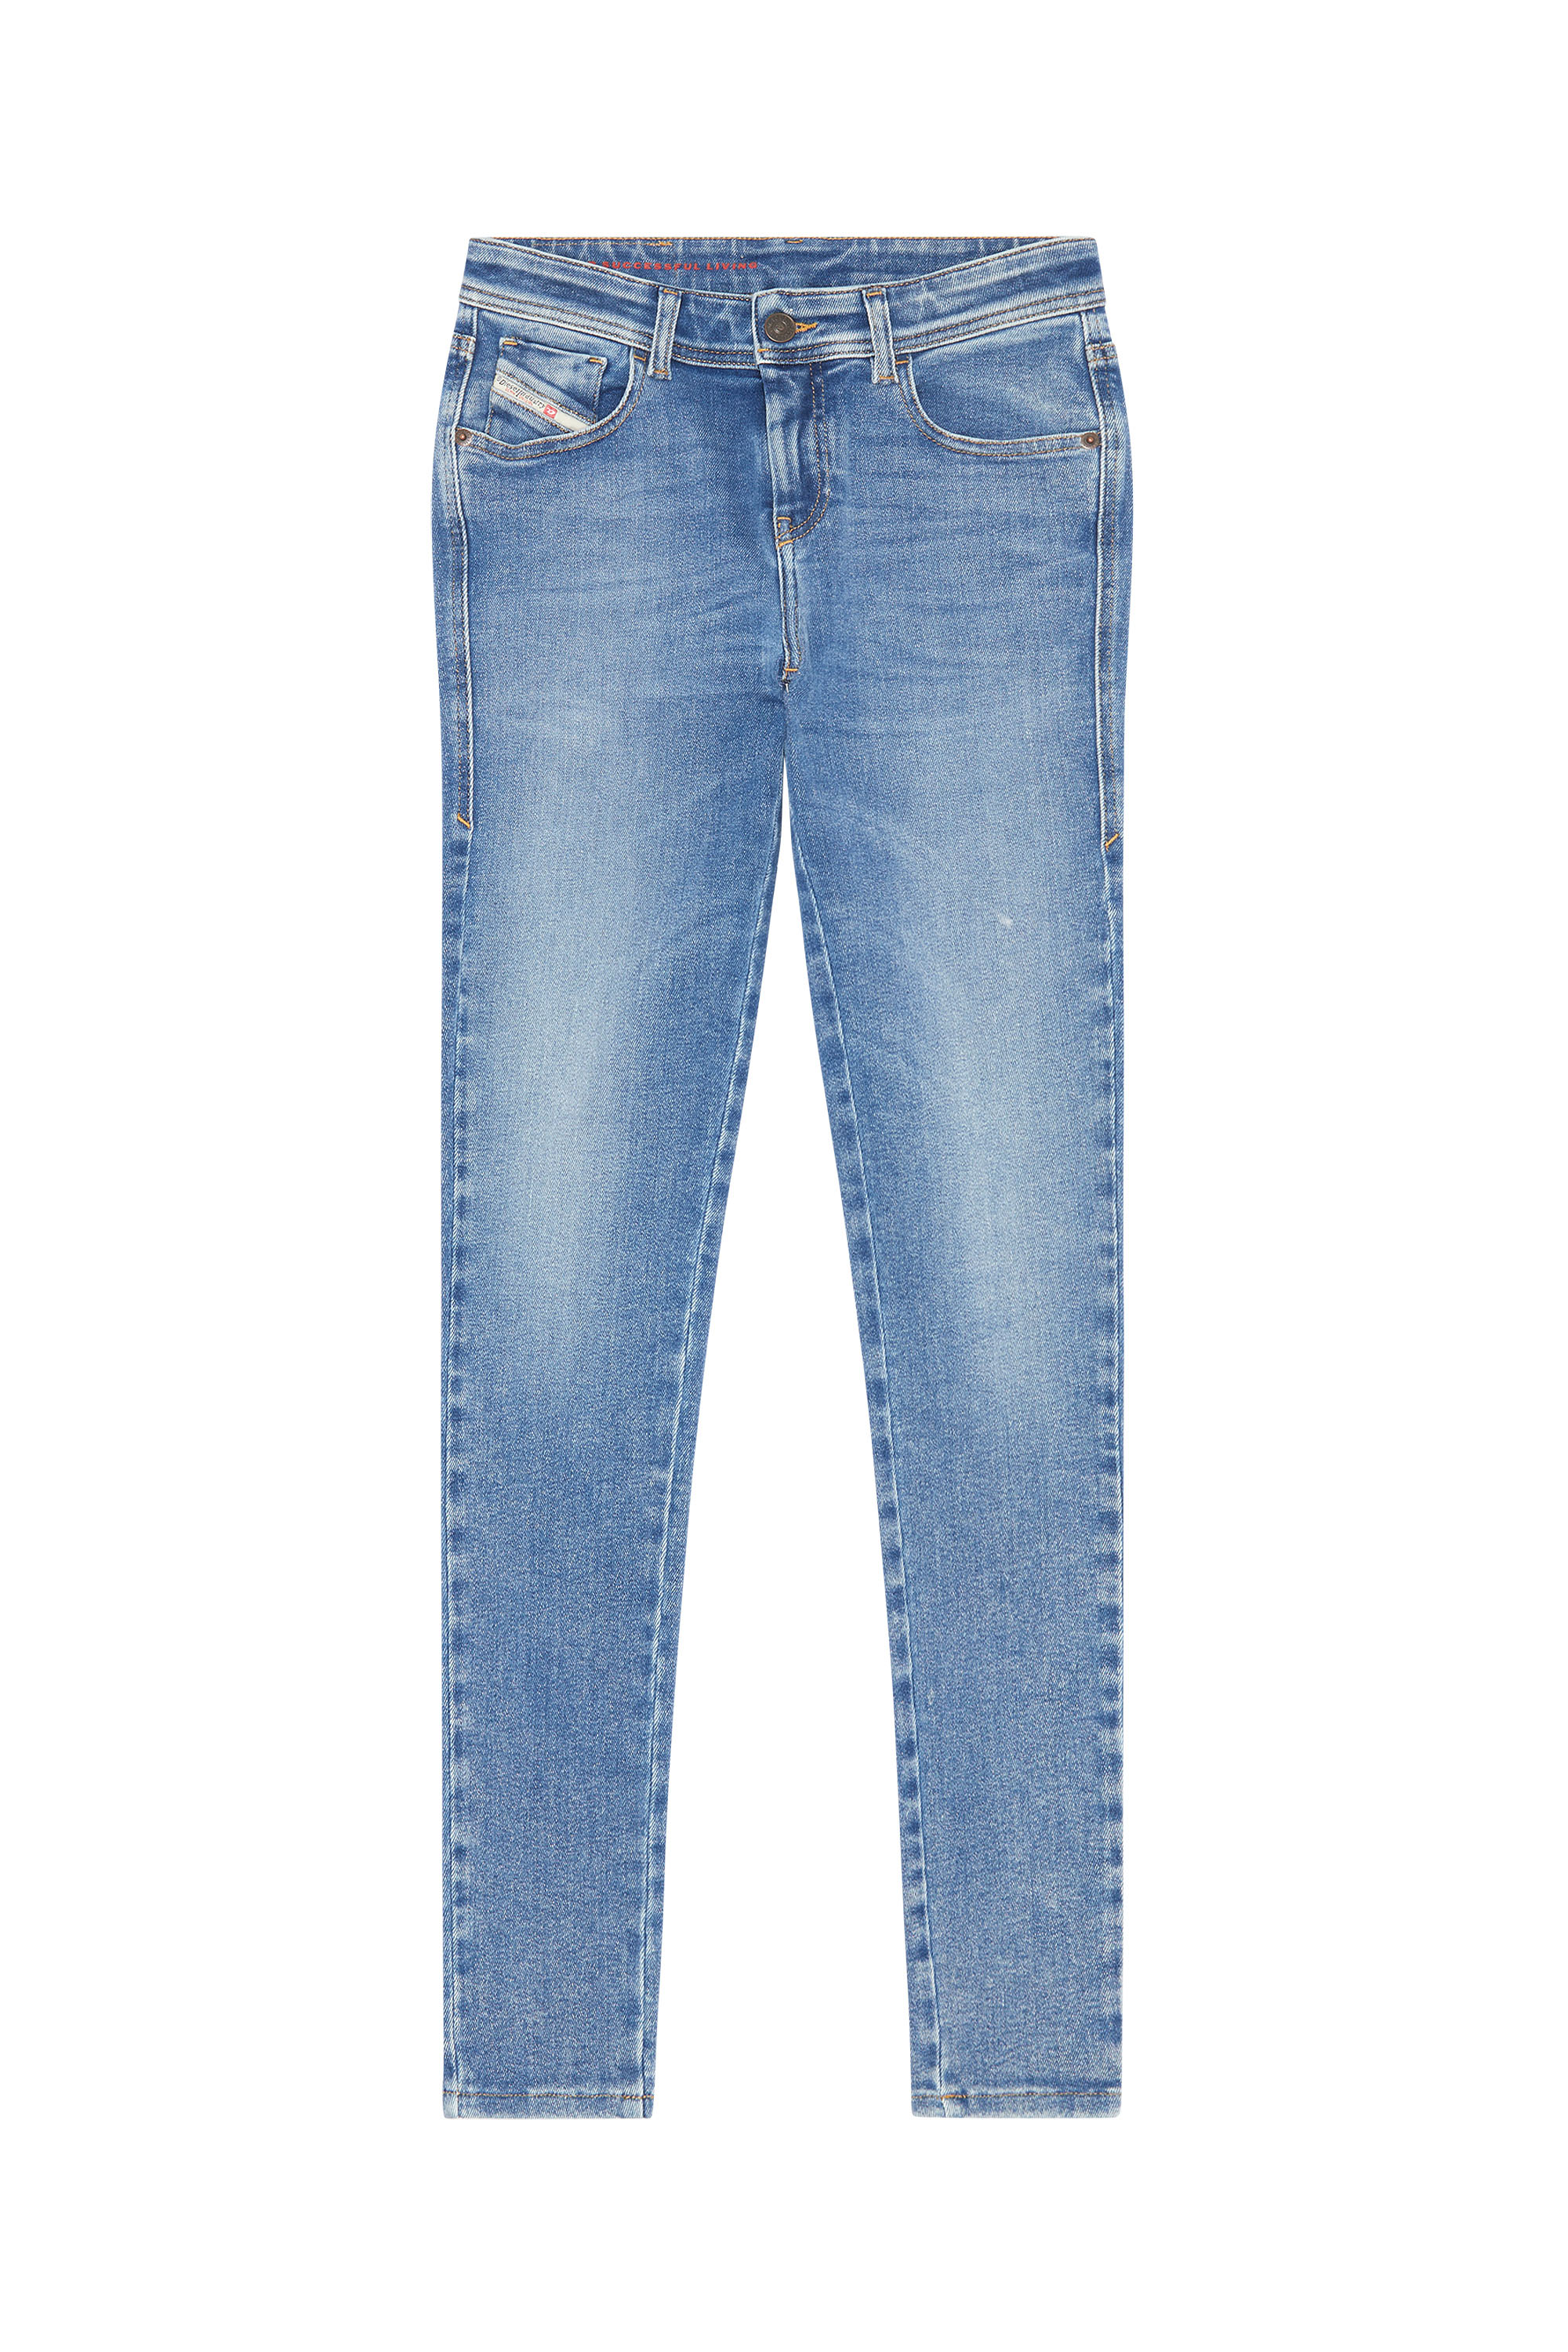 2017 Slandy 09D62 Super skinny Jeans, Medium blue